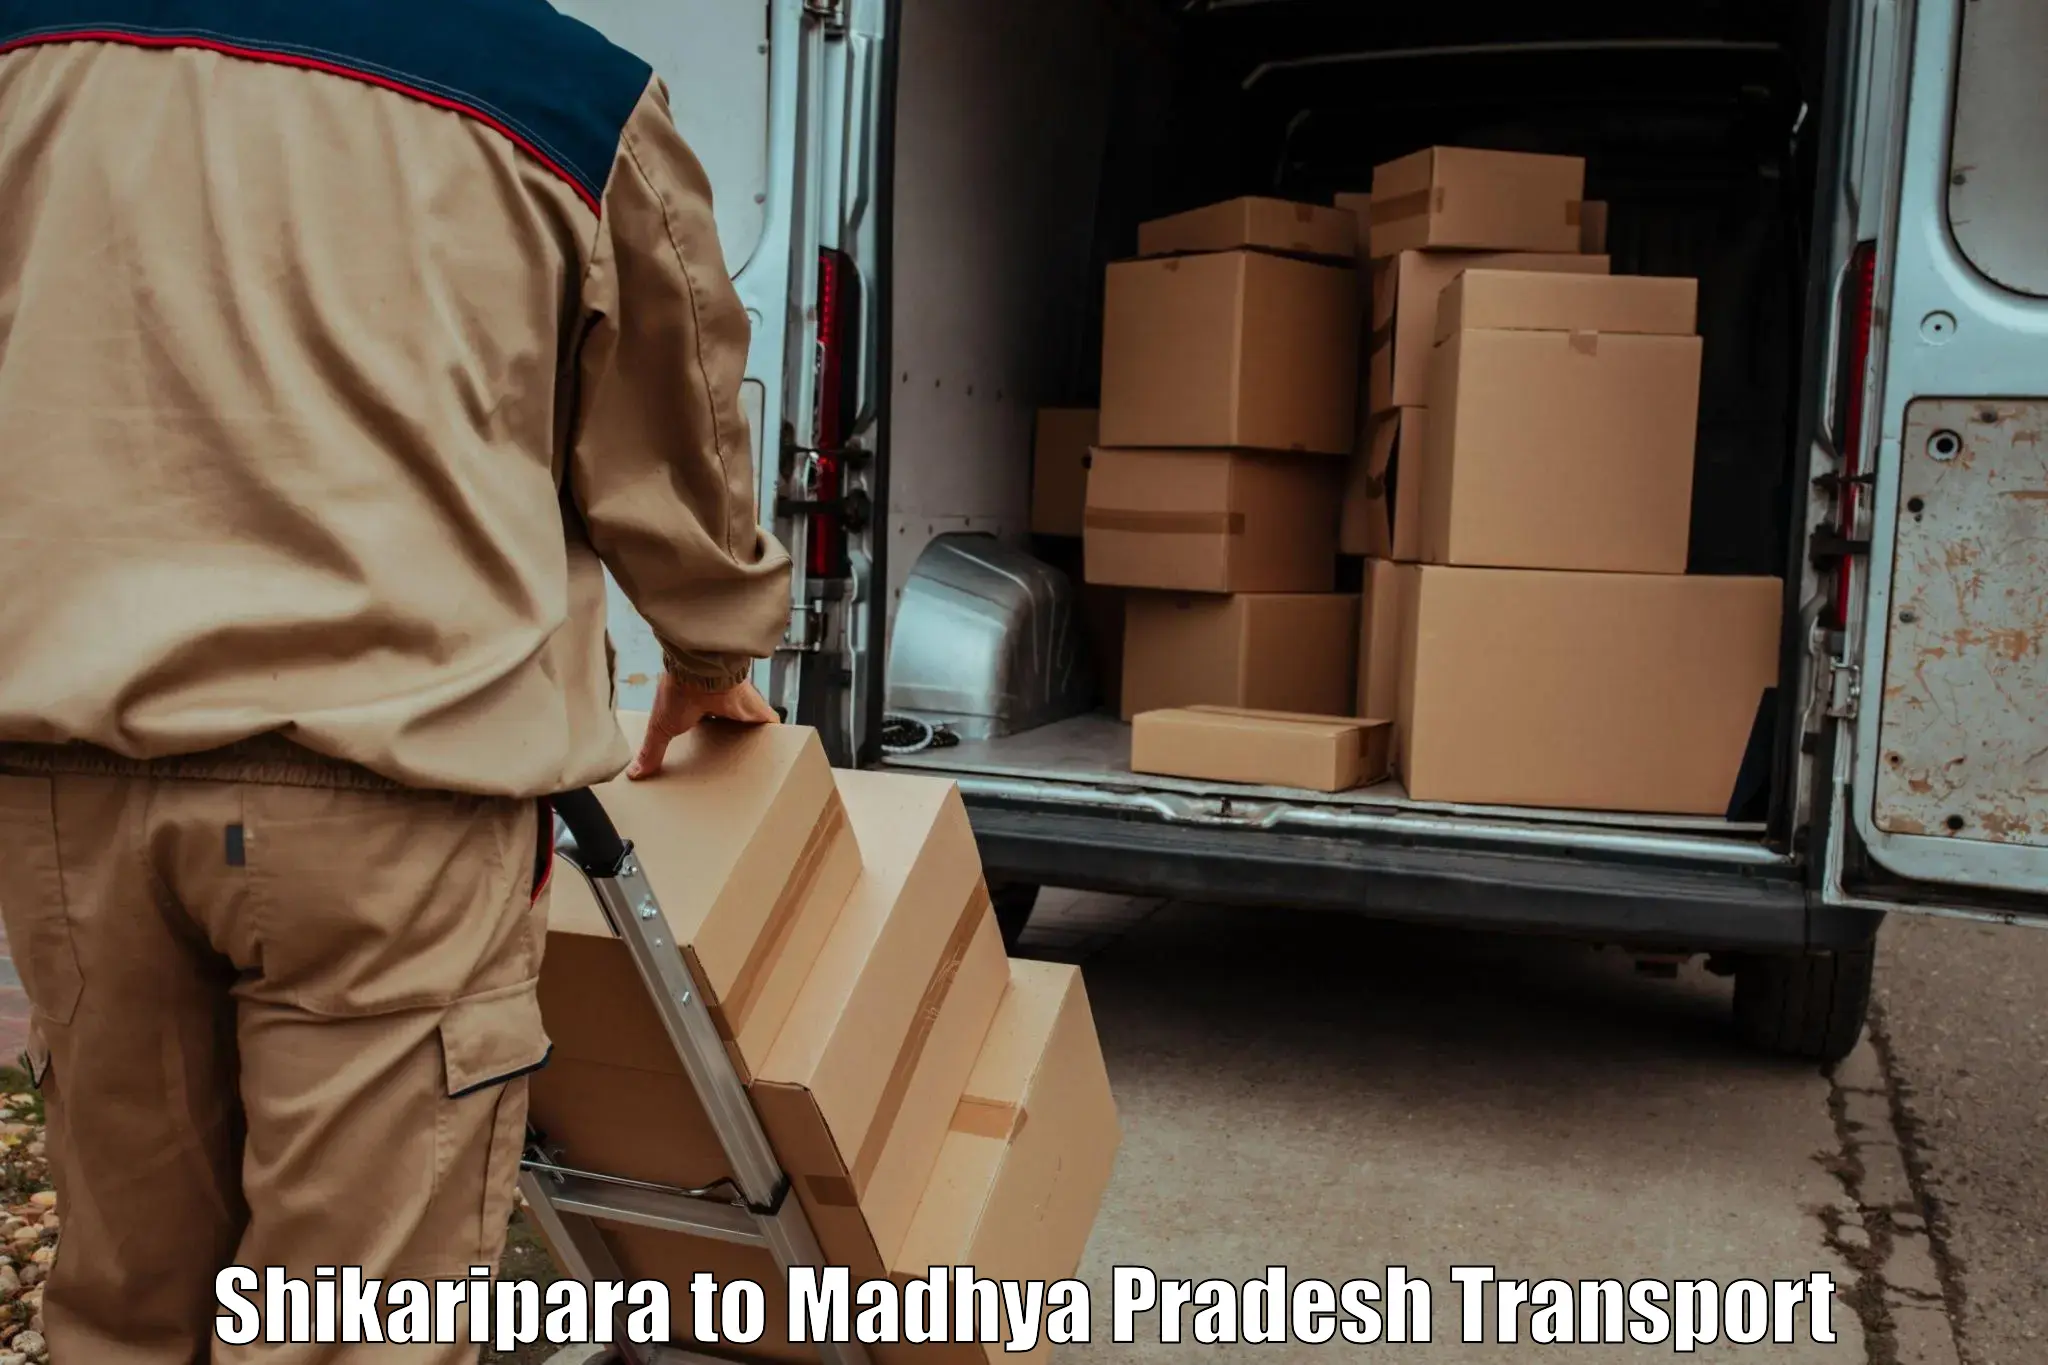 Lorry transport service Shikaripara to Bhopal